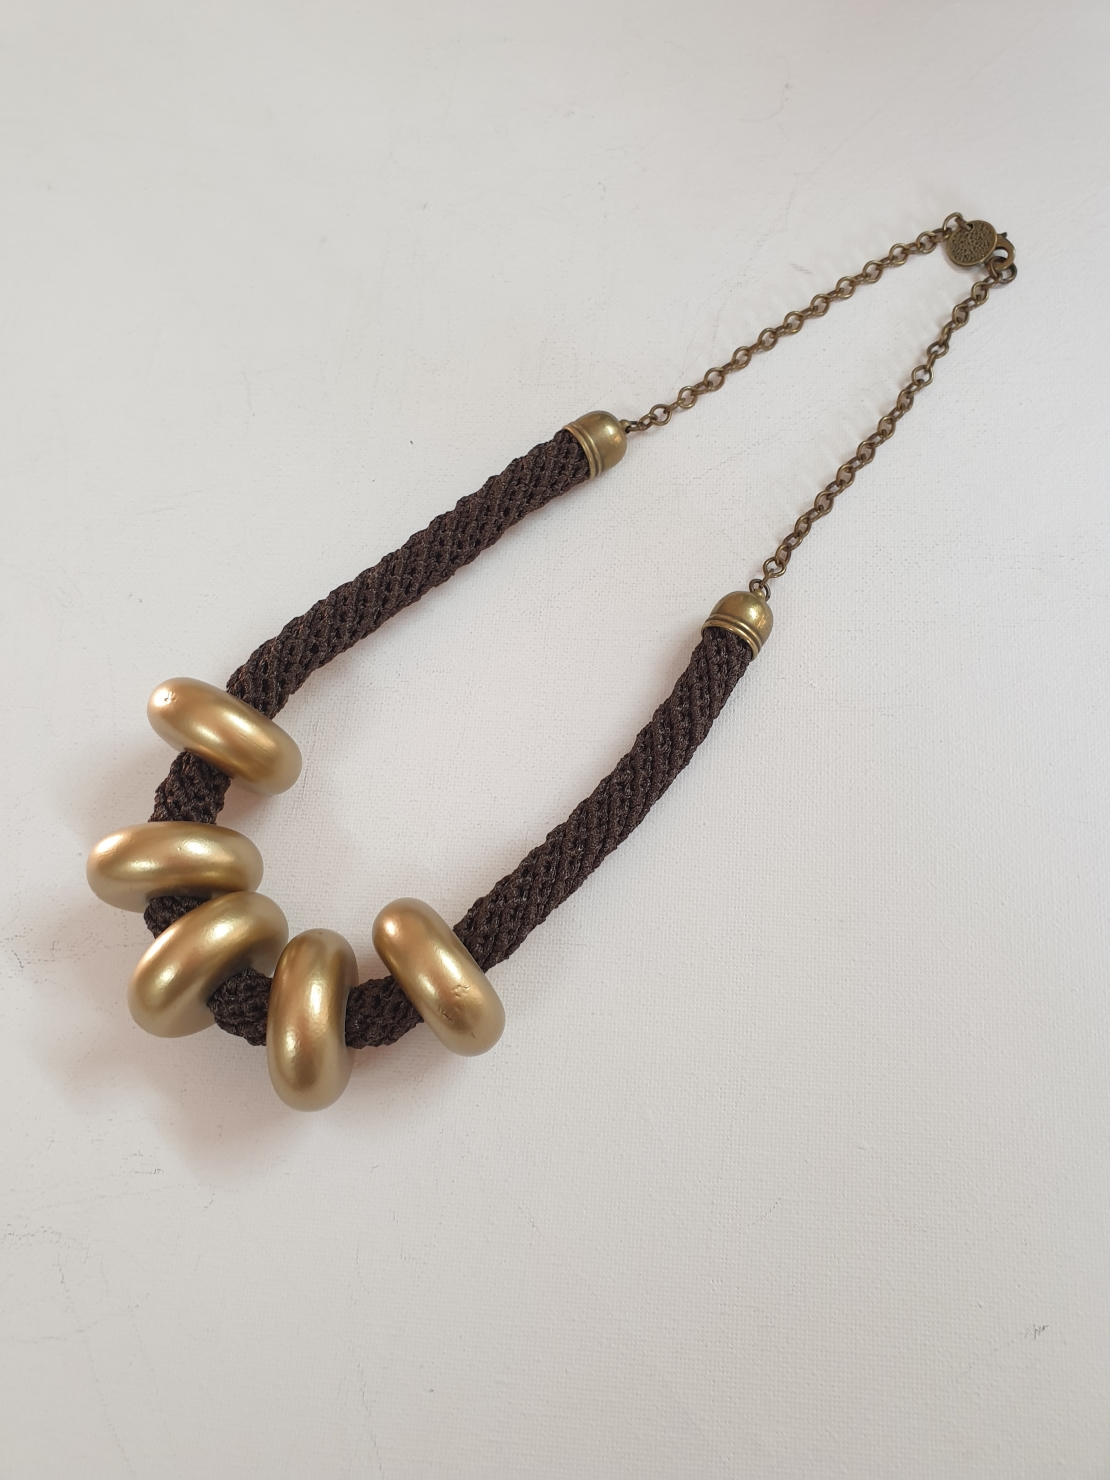 brown / gold necklace | Keren